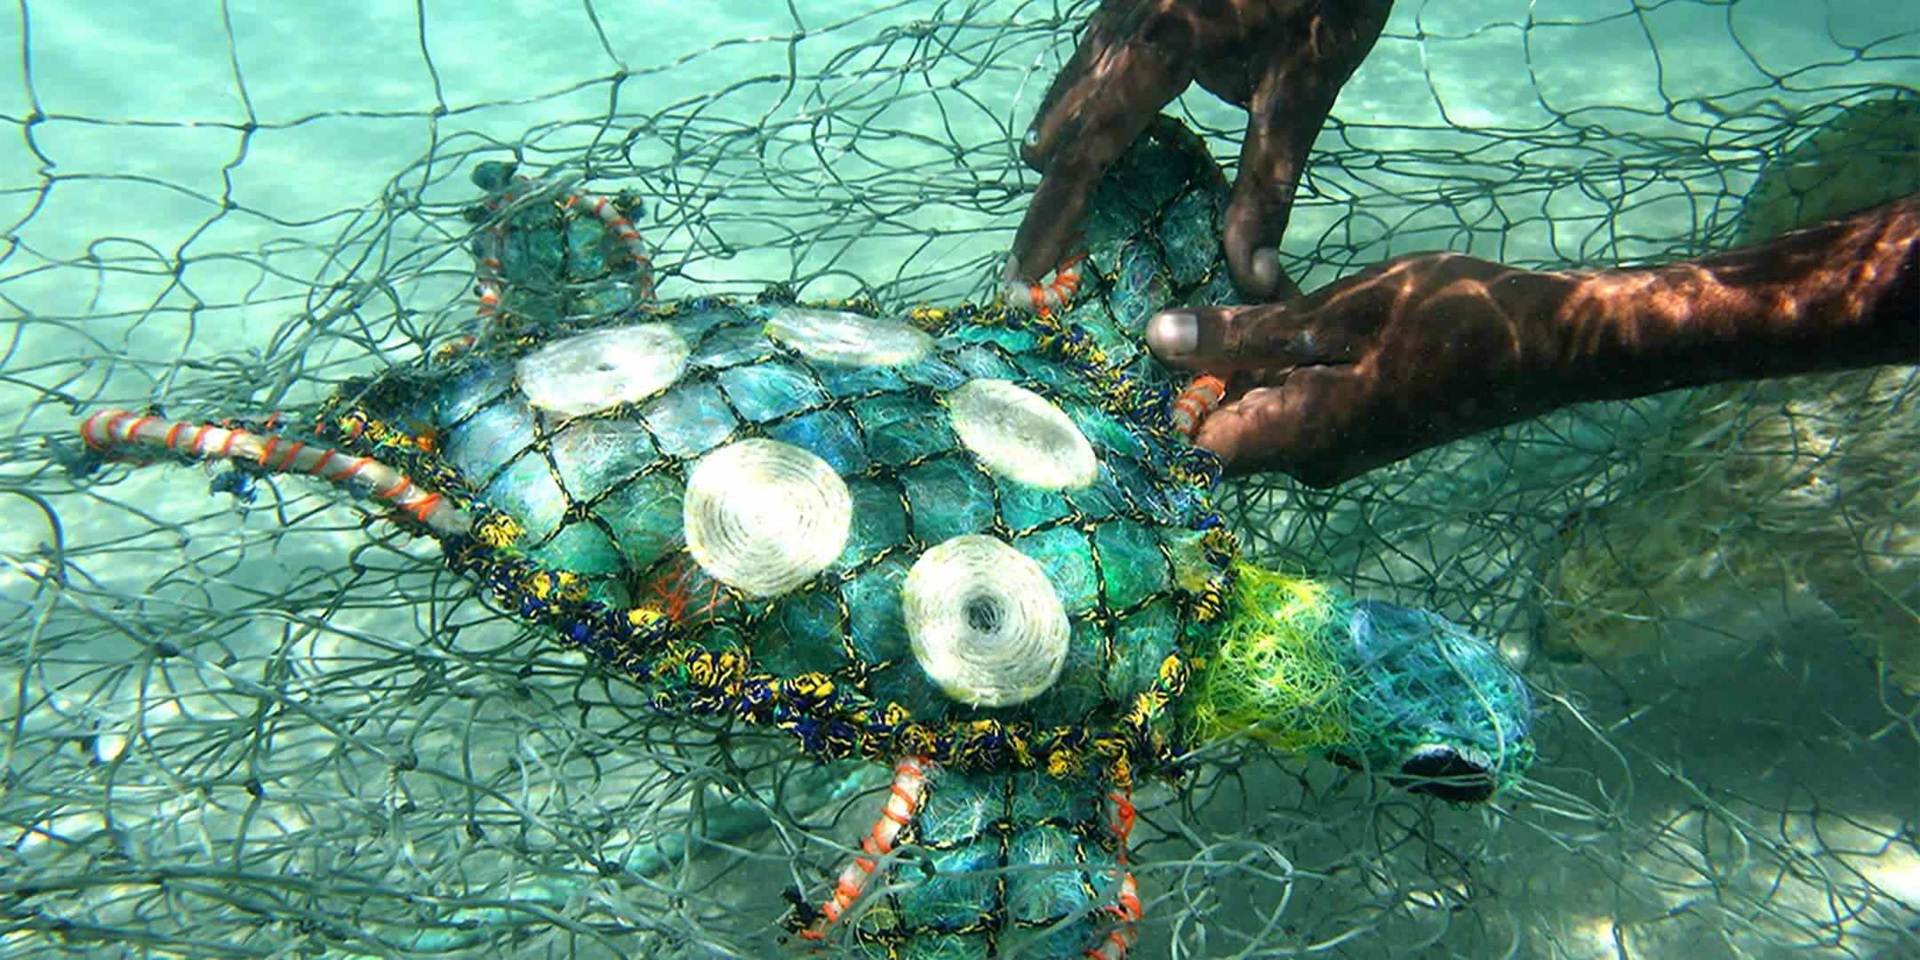 Ghost net turtle in the water of Erub Island. Image: Erub Arts.